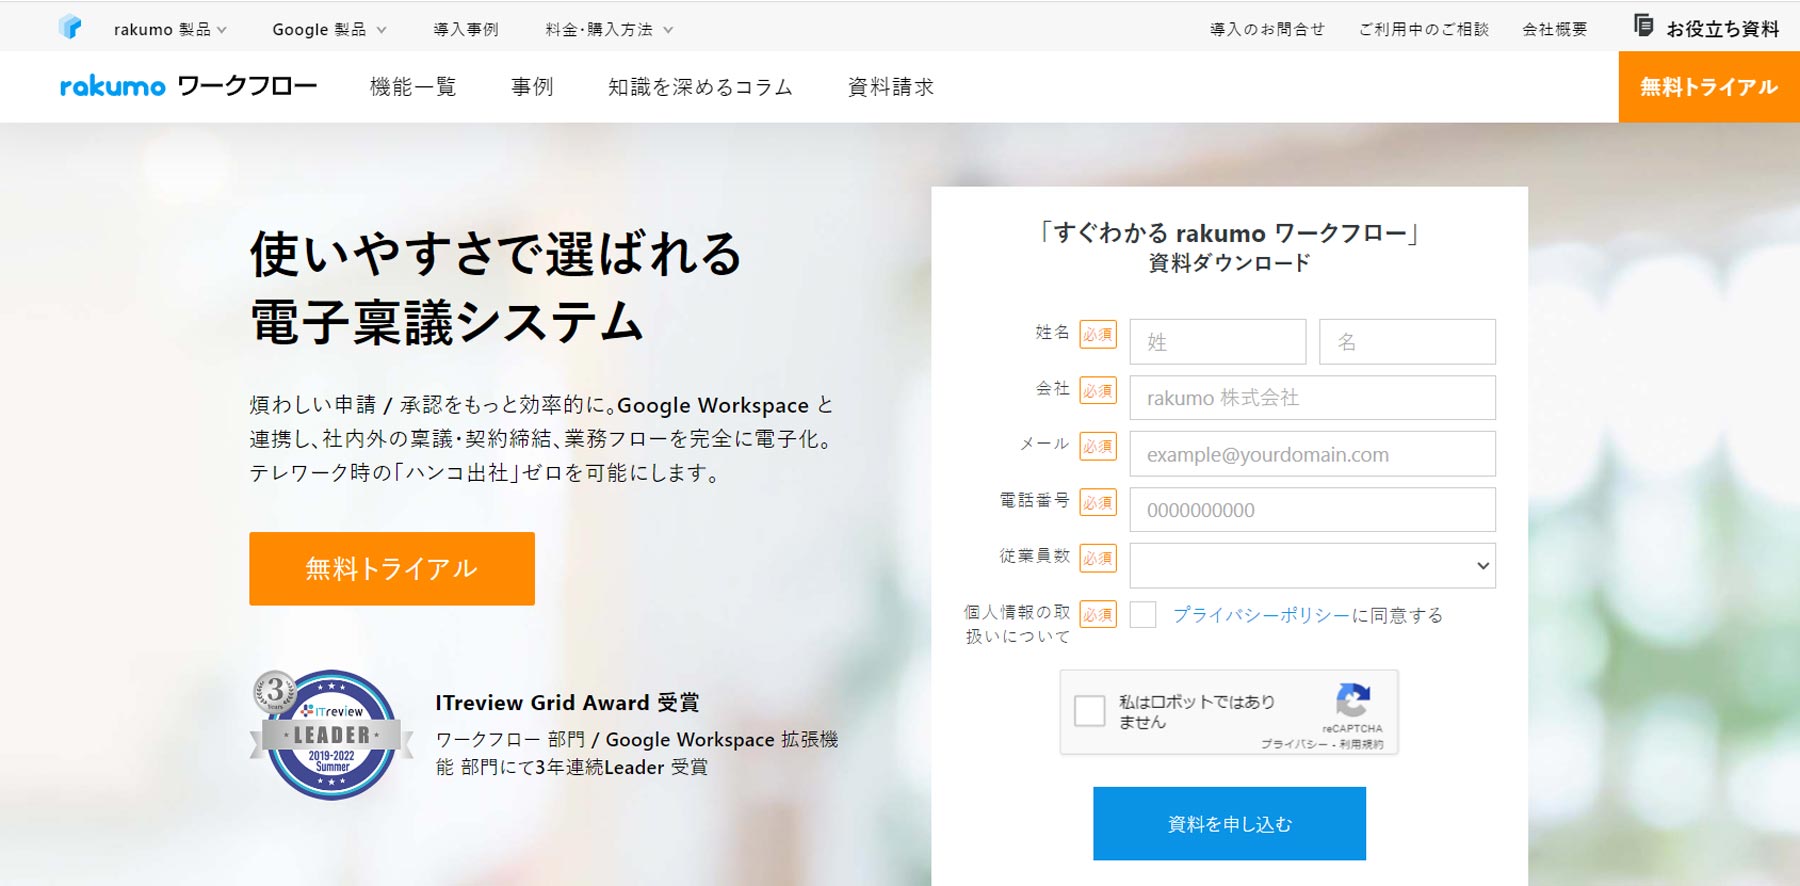 rakumo ワークフロー公式Webサイト